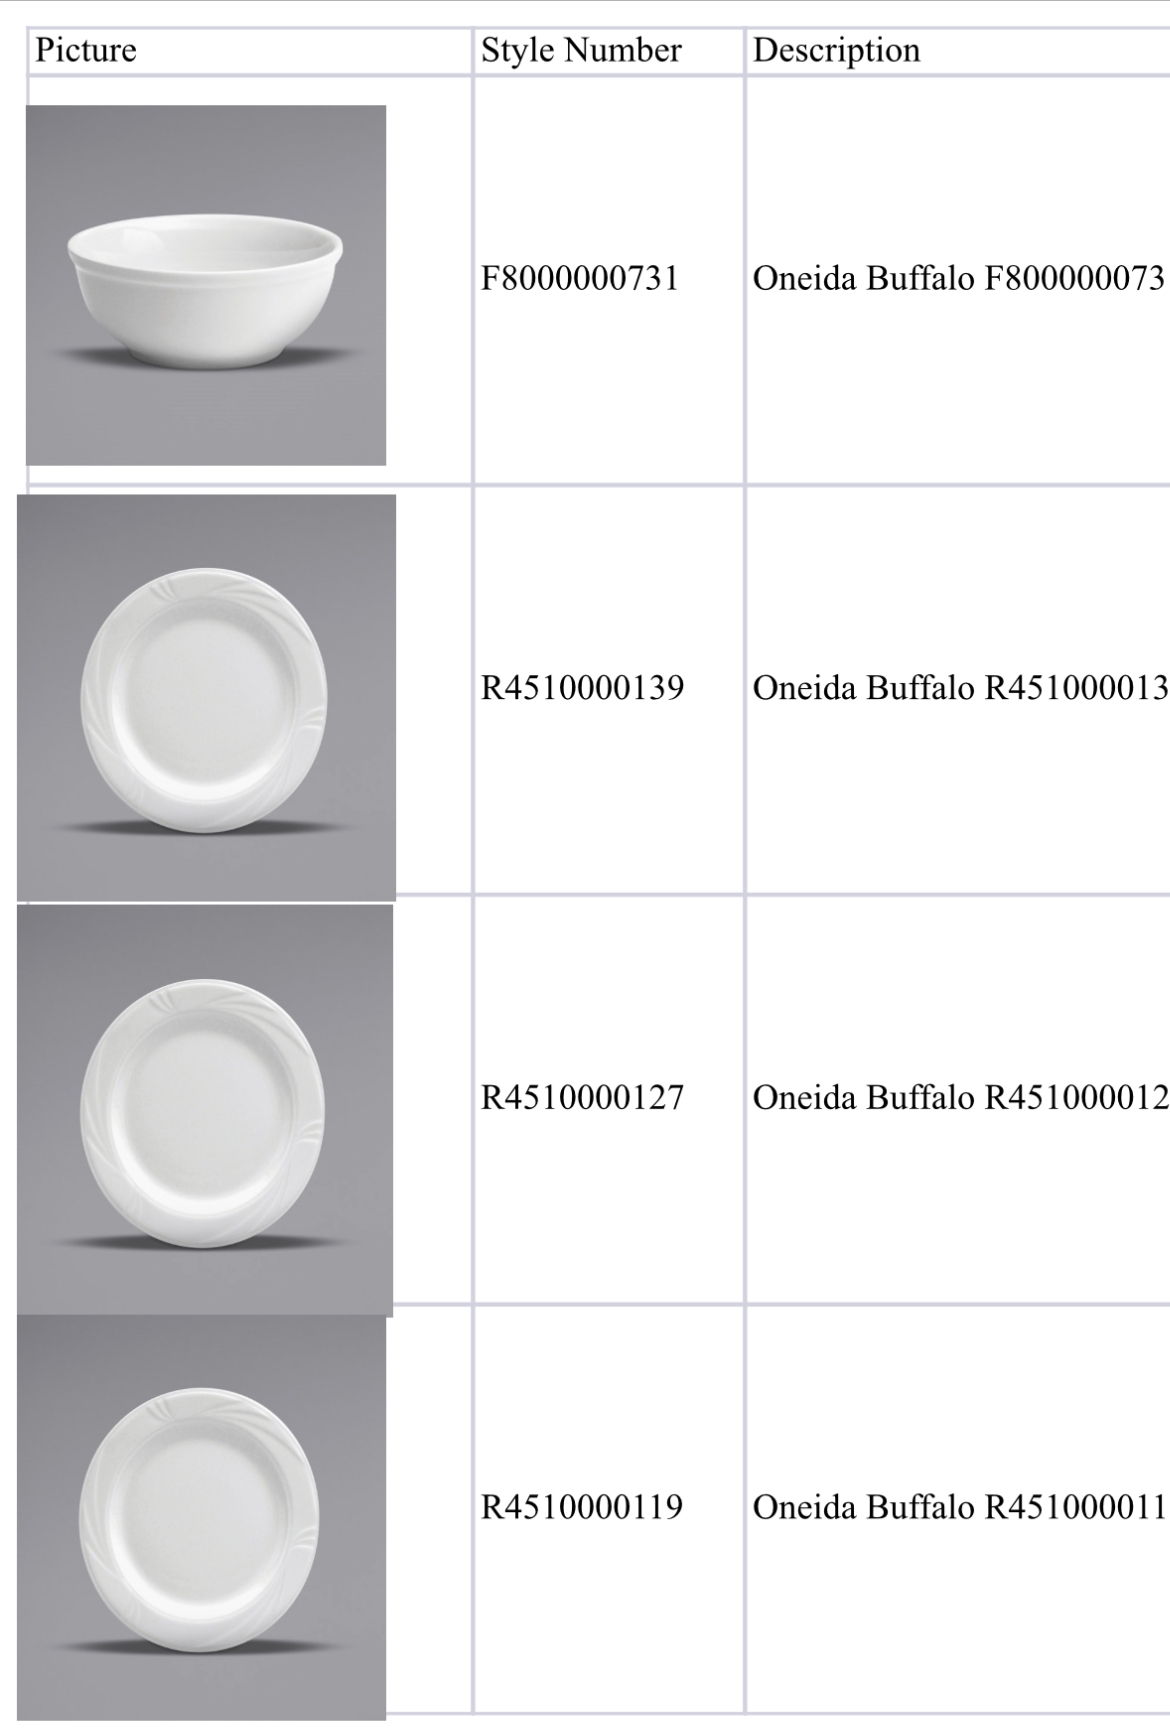 49195 - Oneida Porcelain bowls and plates USA